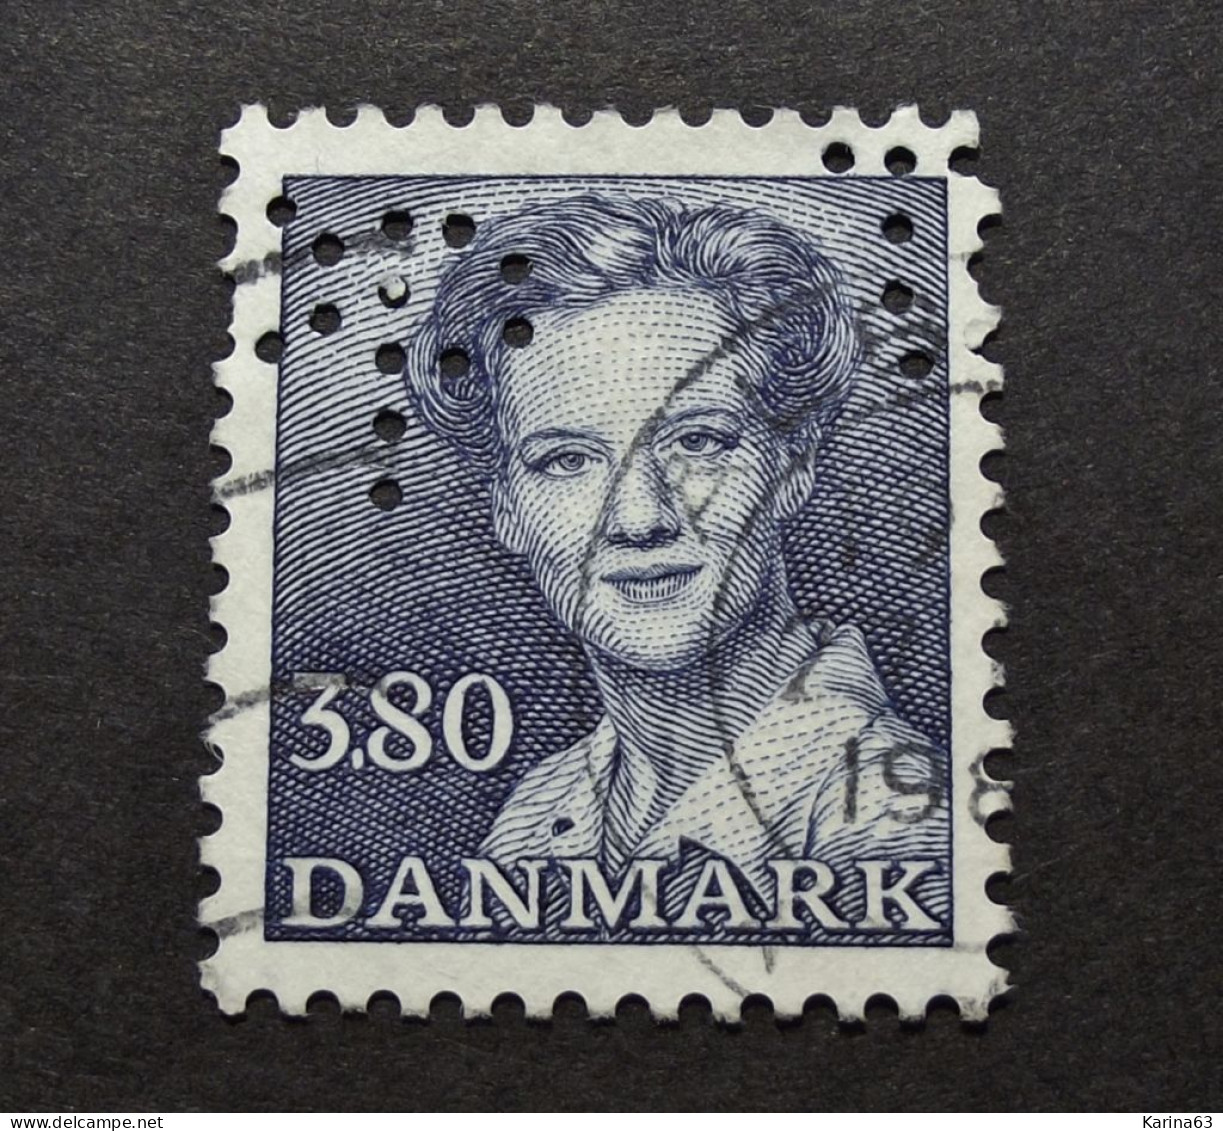 Denmark  - Danemark - 1975 - Queen Margrethe Perfin -  Topsikring Insurance Company From Copenhagen   - Cancelled - Usado